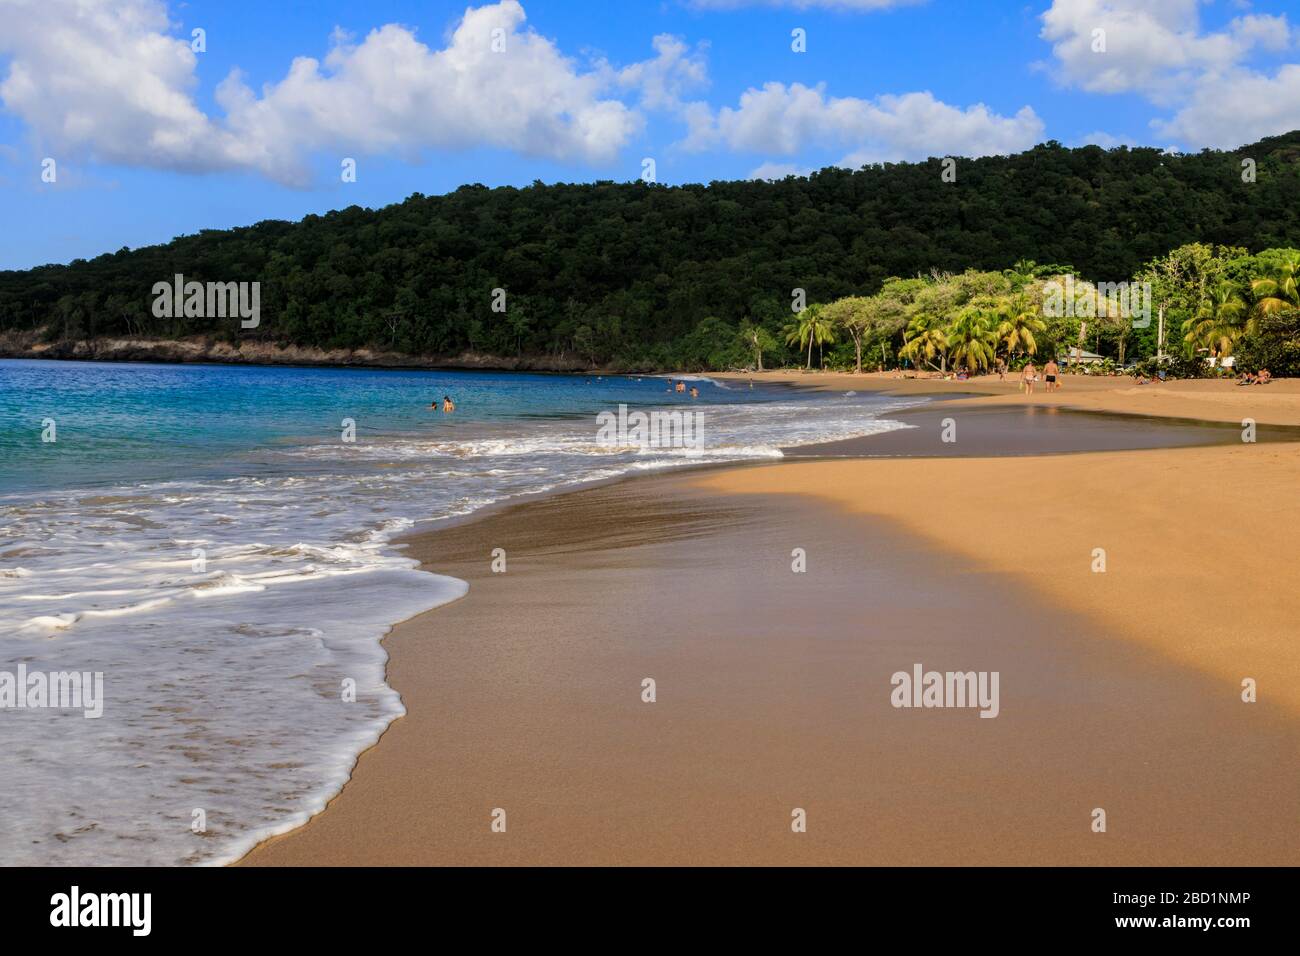 Tropical Anse de la Perle beach, palm trees, golden sand, blue sea, Death In Paradise location, Deshaies, Guadeloupe, Leeward Islands, Caribbean Stock Photo